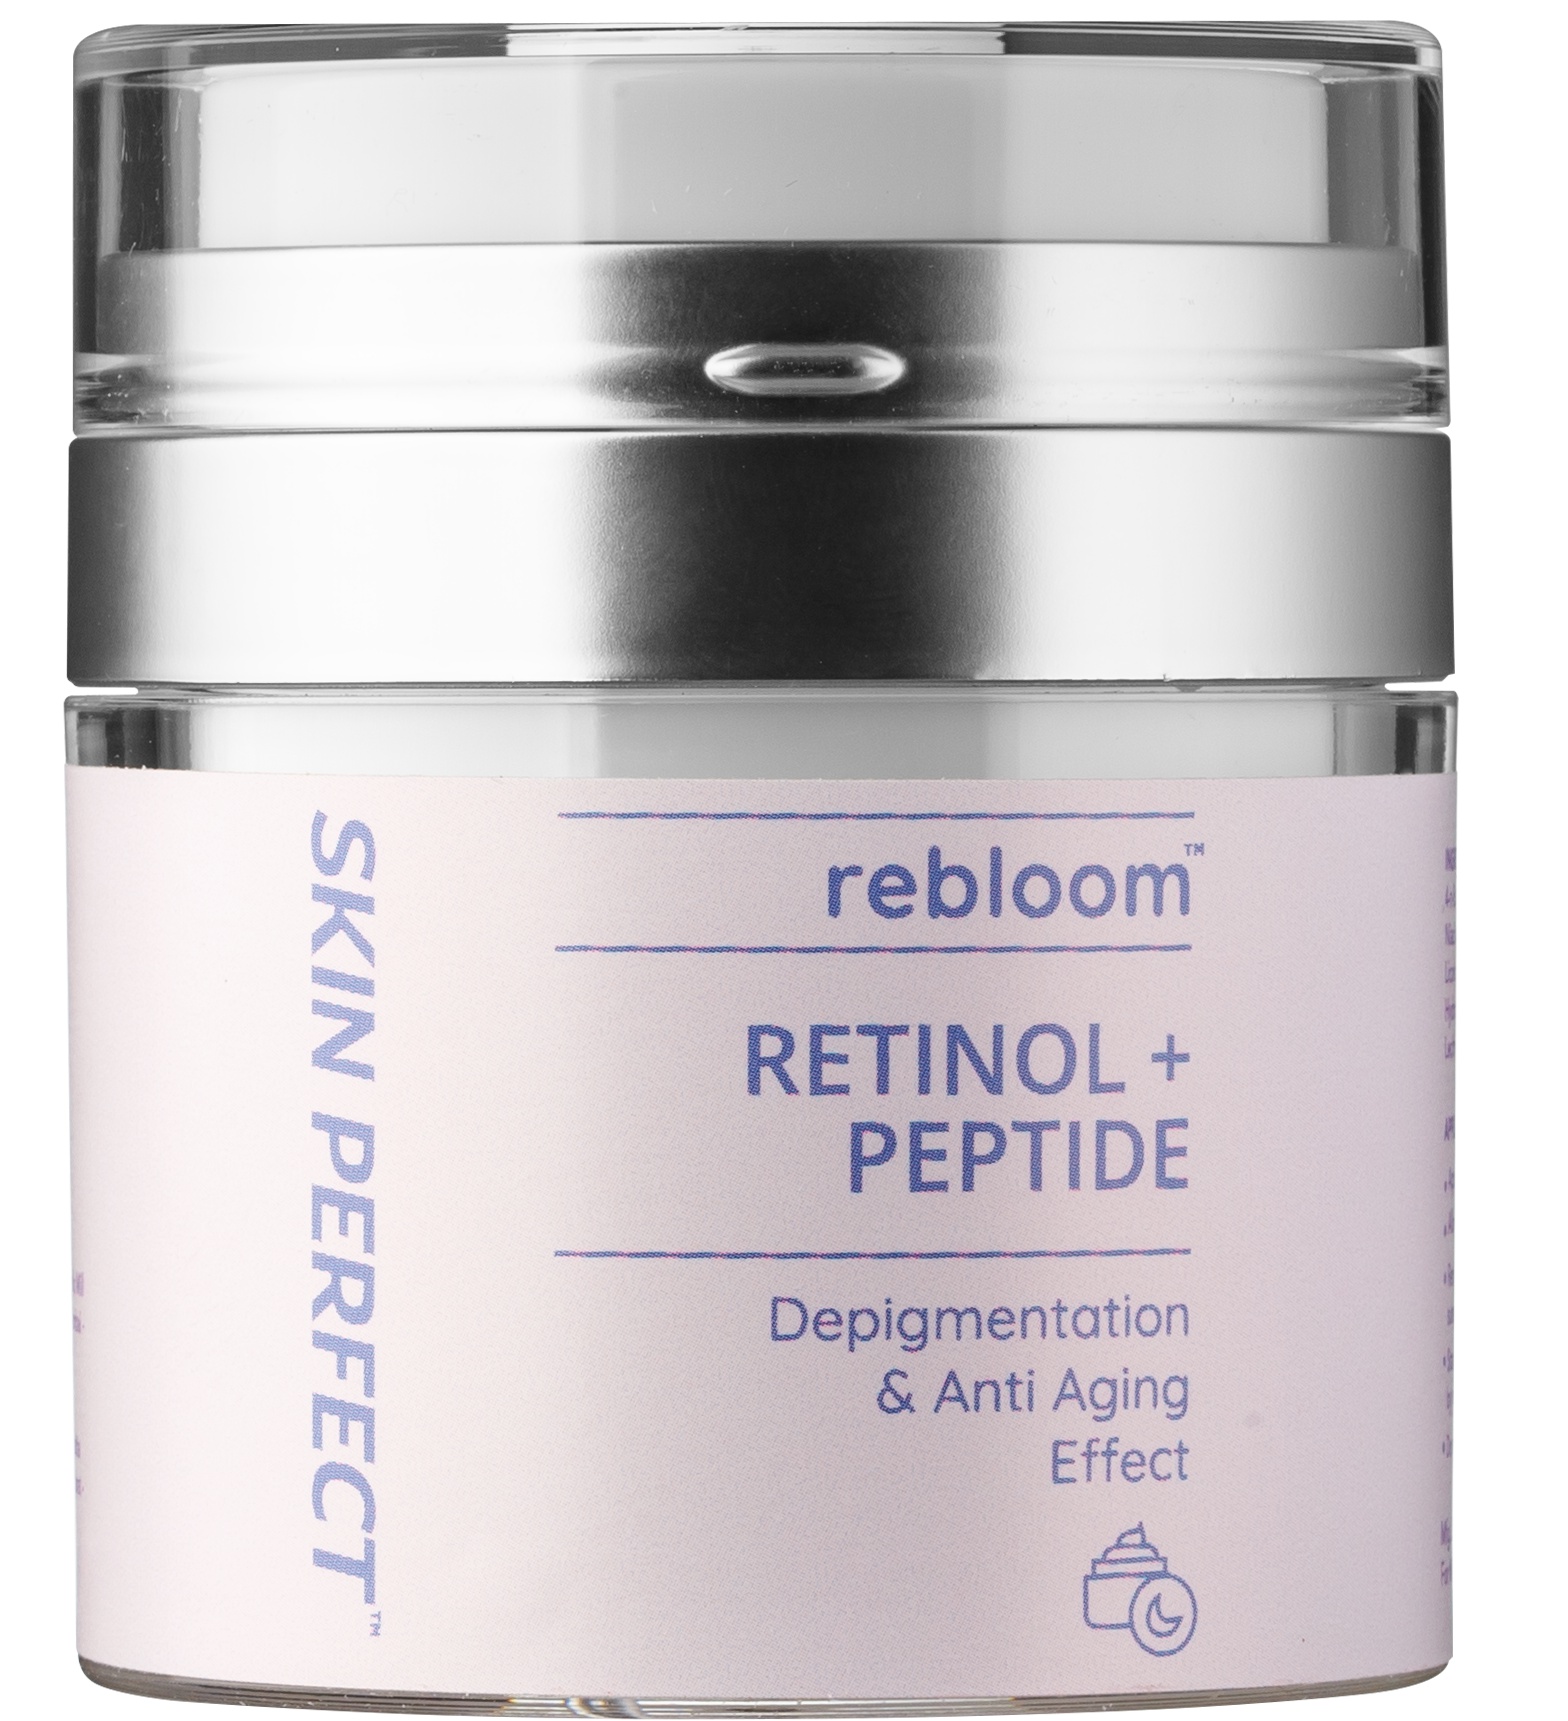 Rebloom Retinol + Peptide